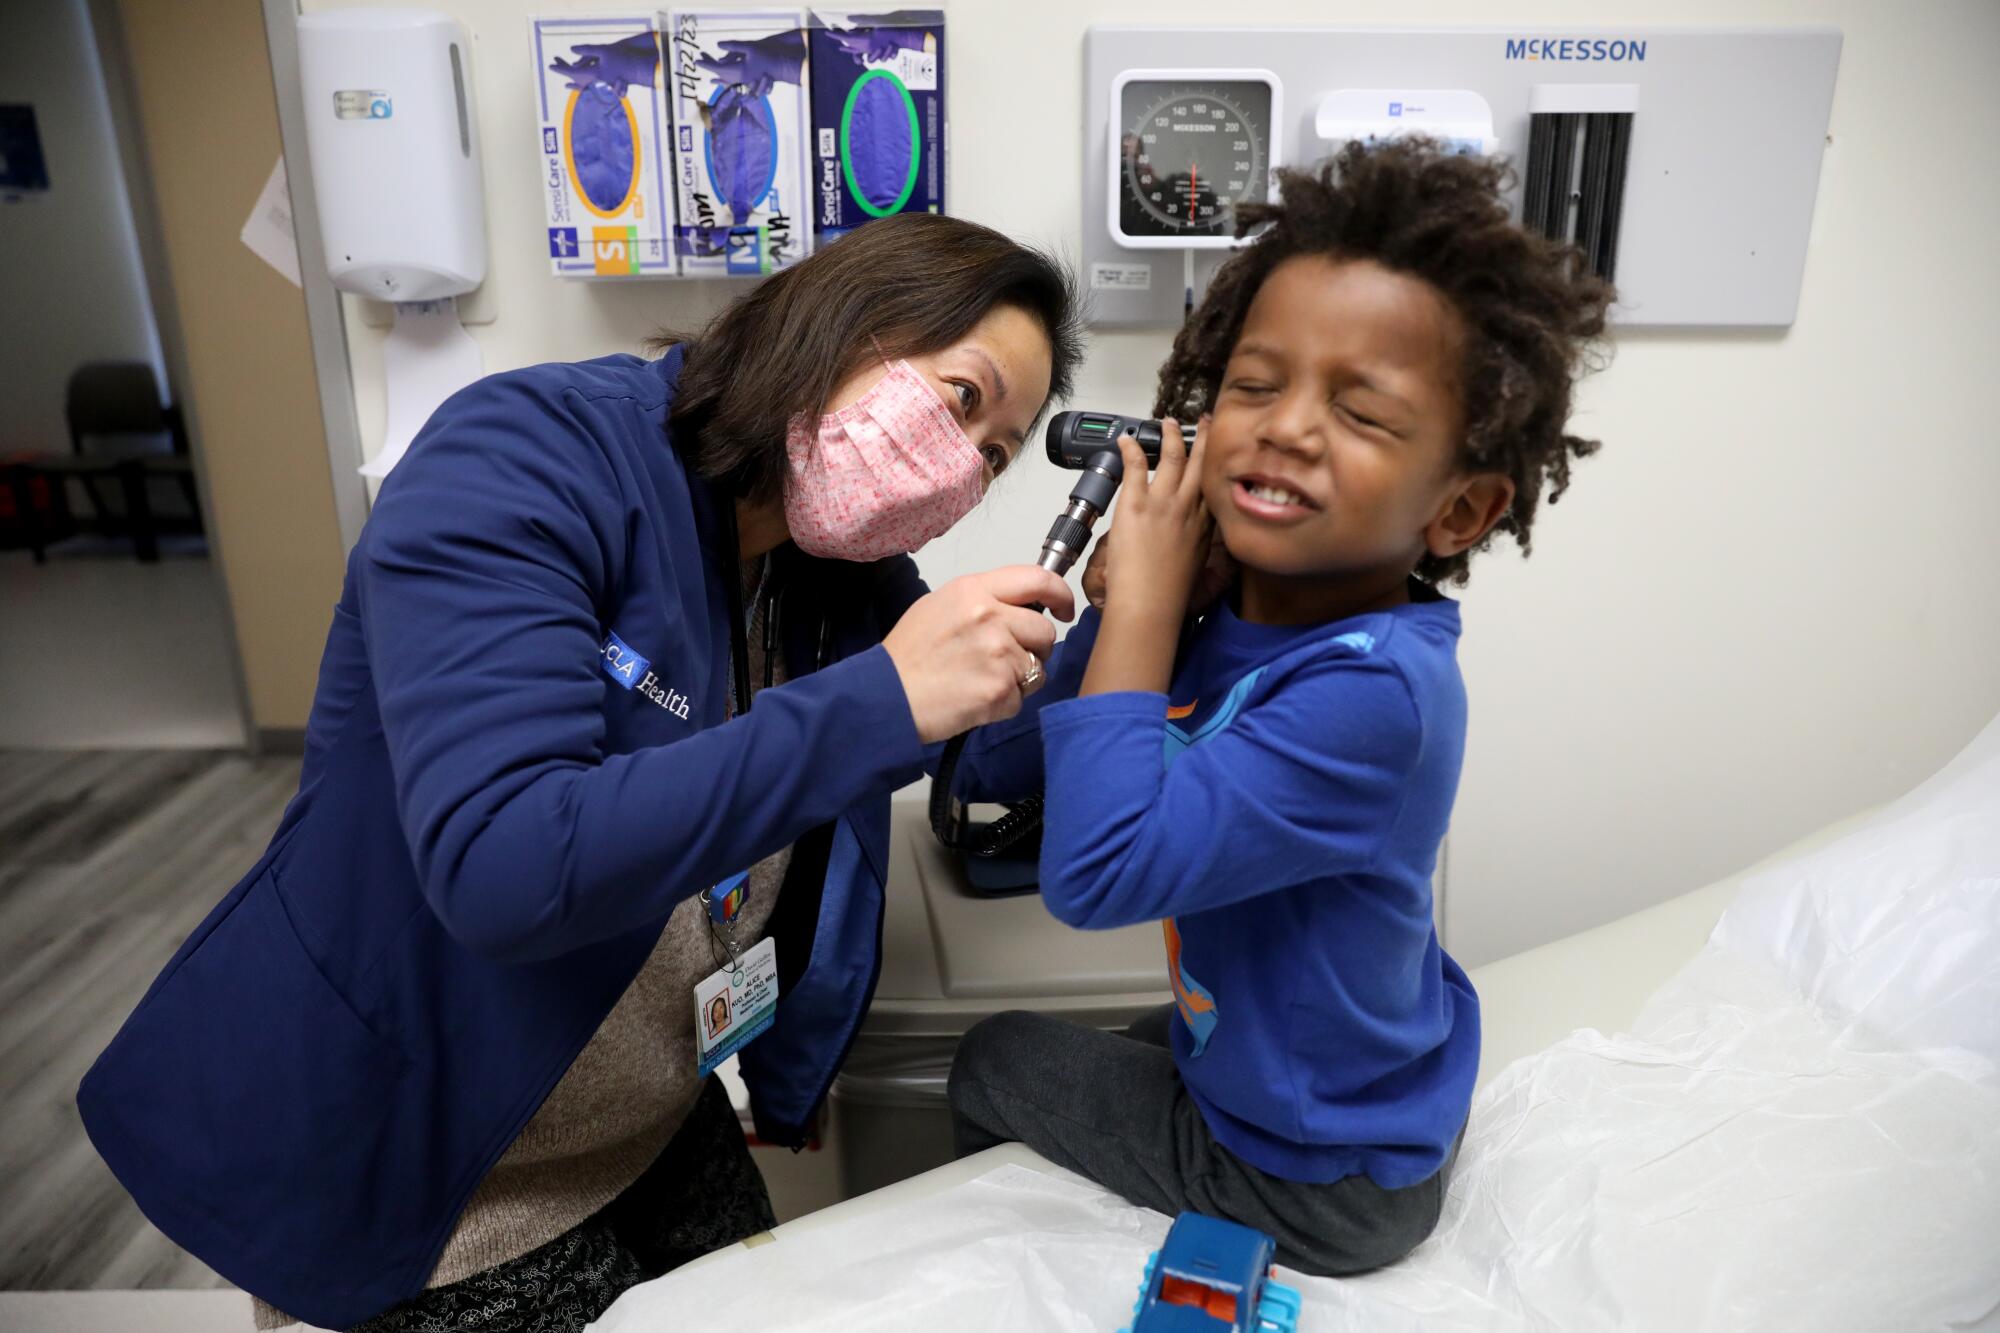 The Growing Child: 2-Year-Olds - Stanford Medicine Children's Health